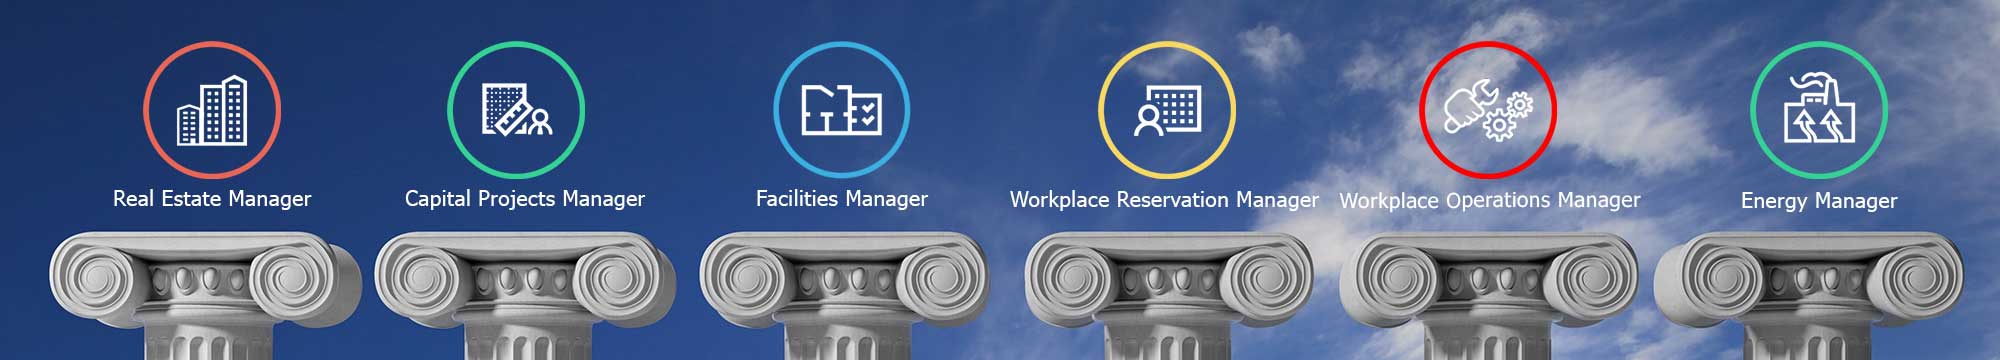 TRIRIGA Logo - The Six Pillars of IWMS: The Ultimate Enterprise Management Tool ...